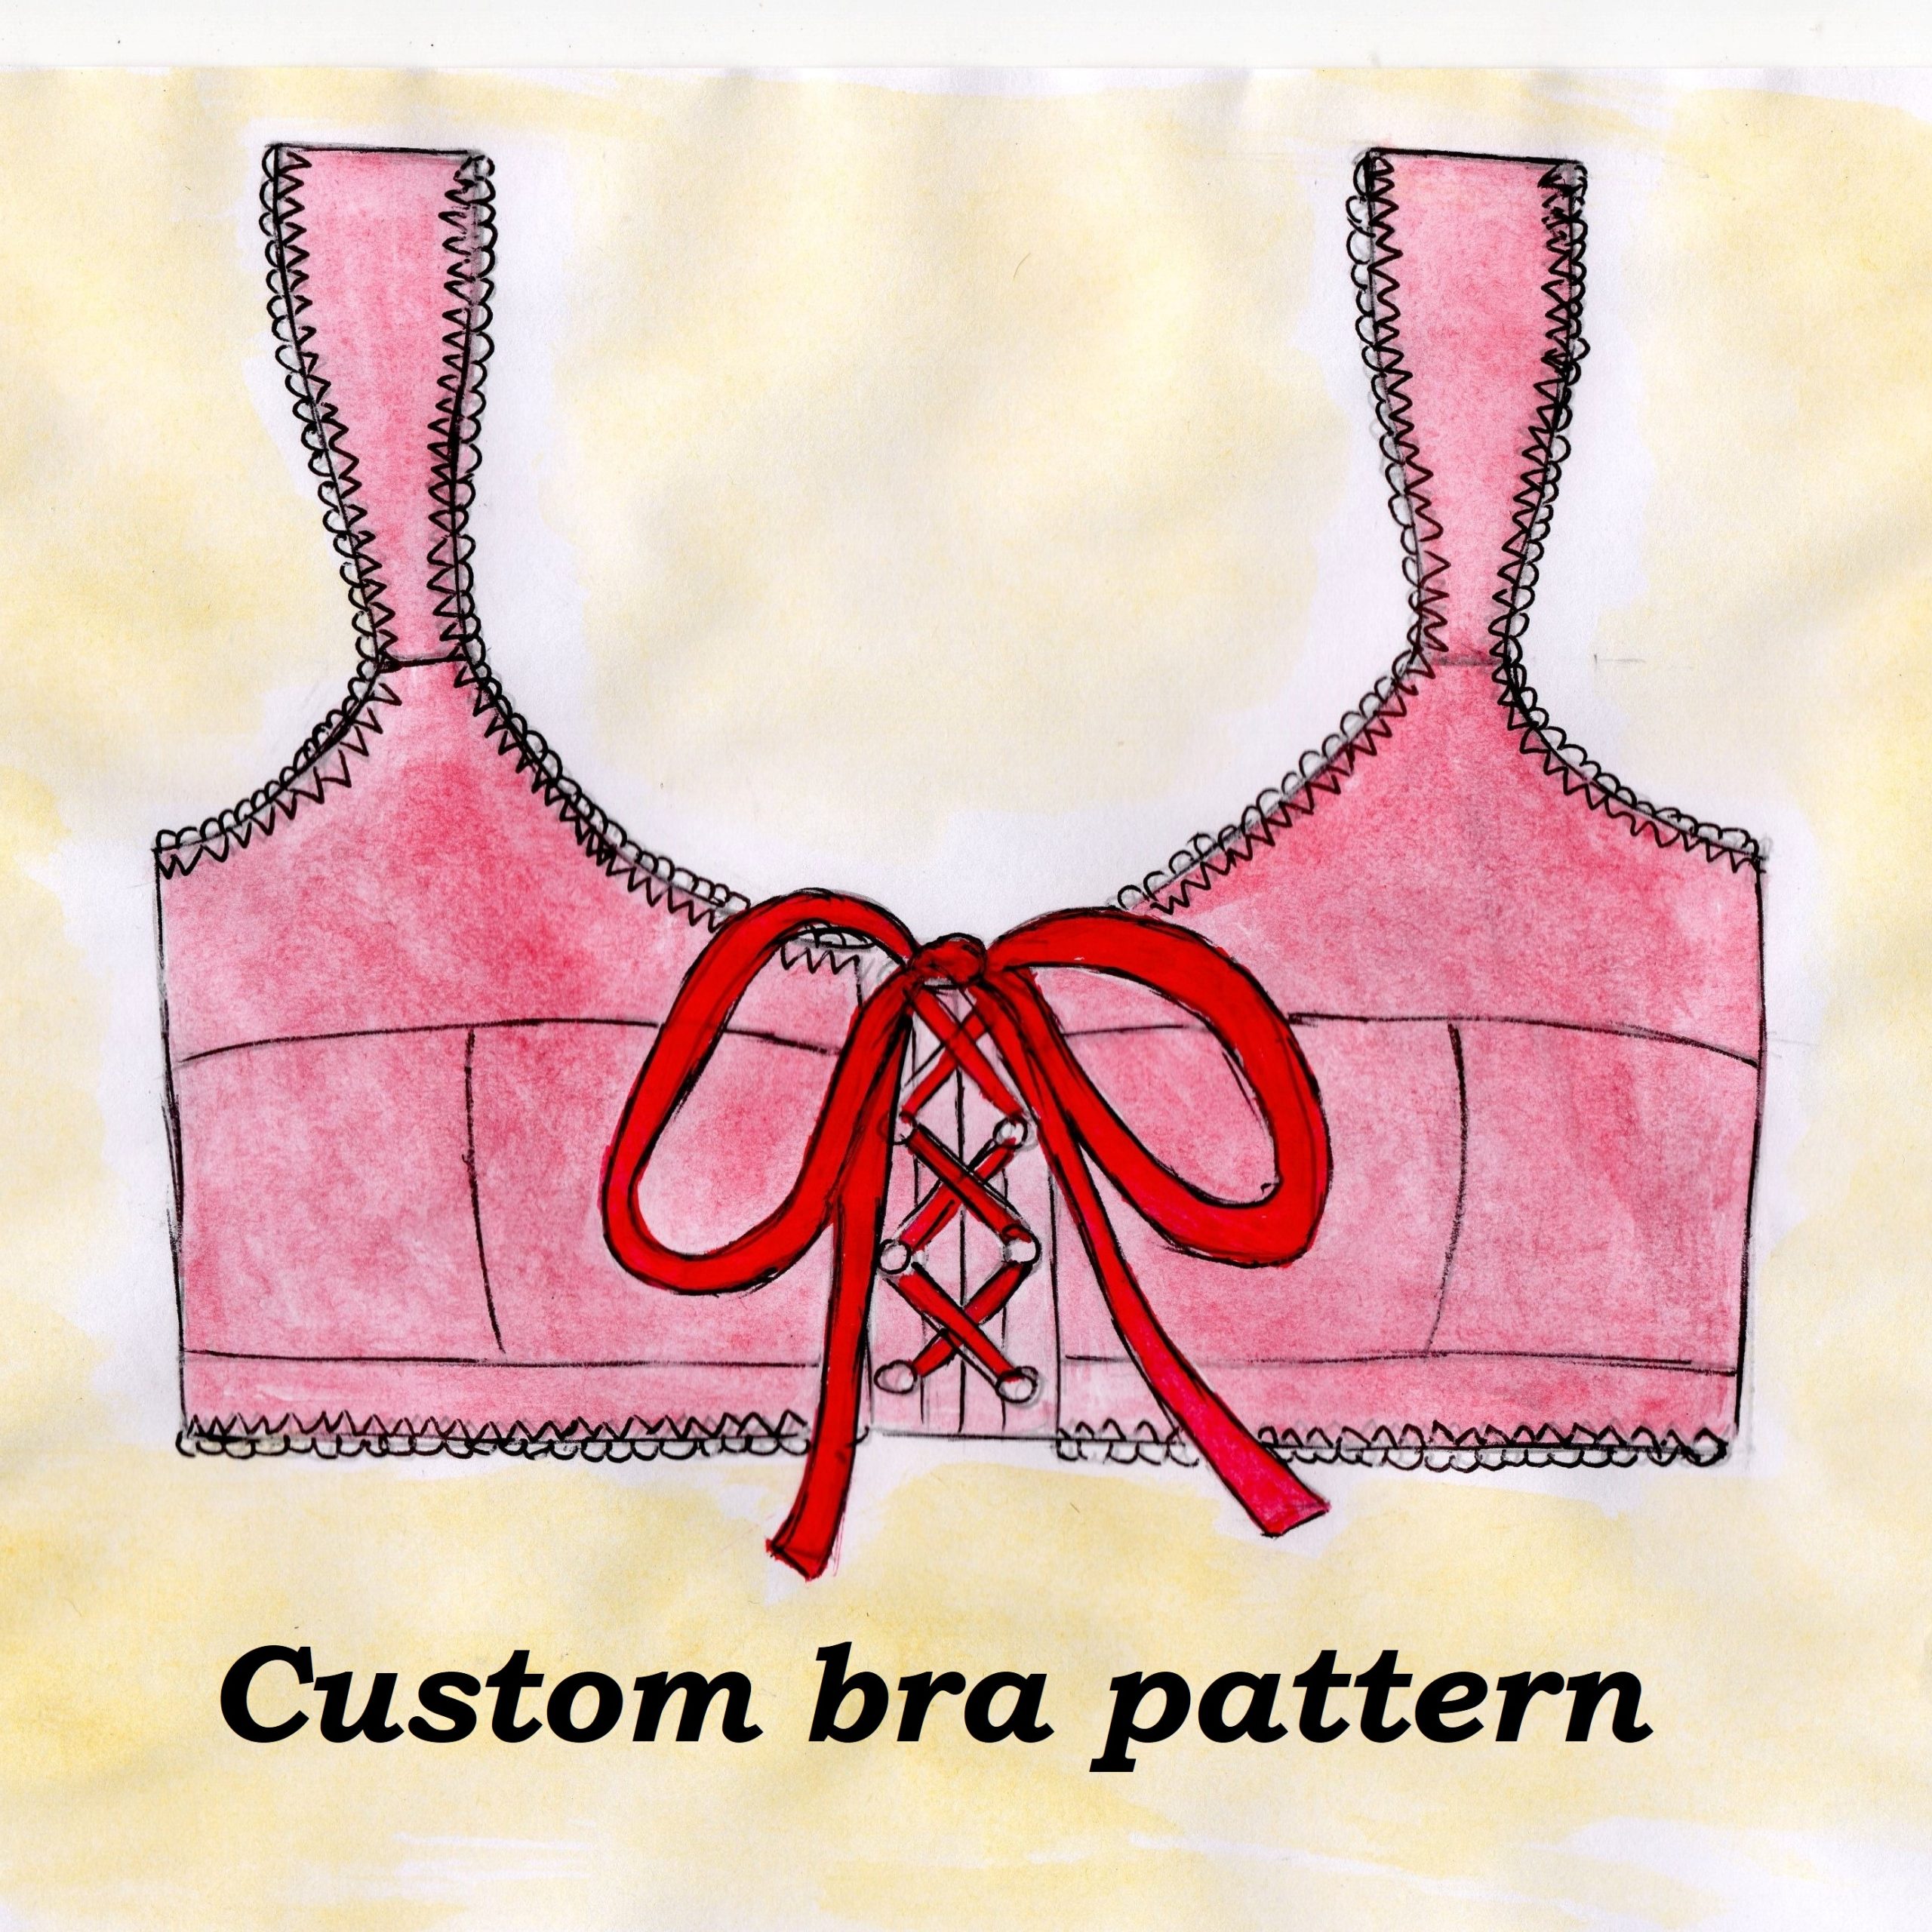 Lace up bra pattern wireless, Bridget, Custom bra pattern